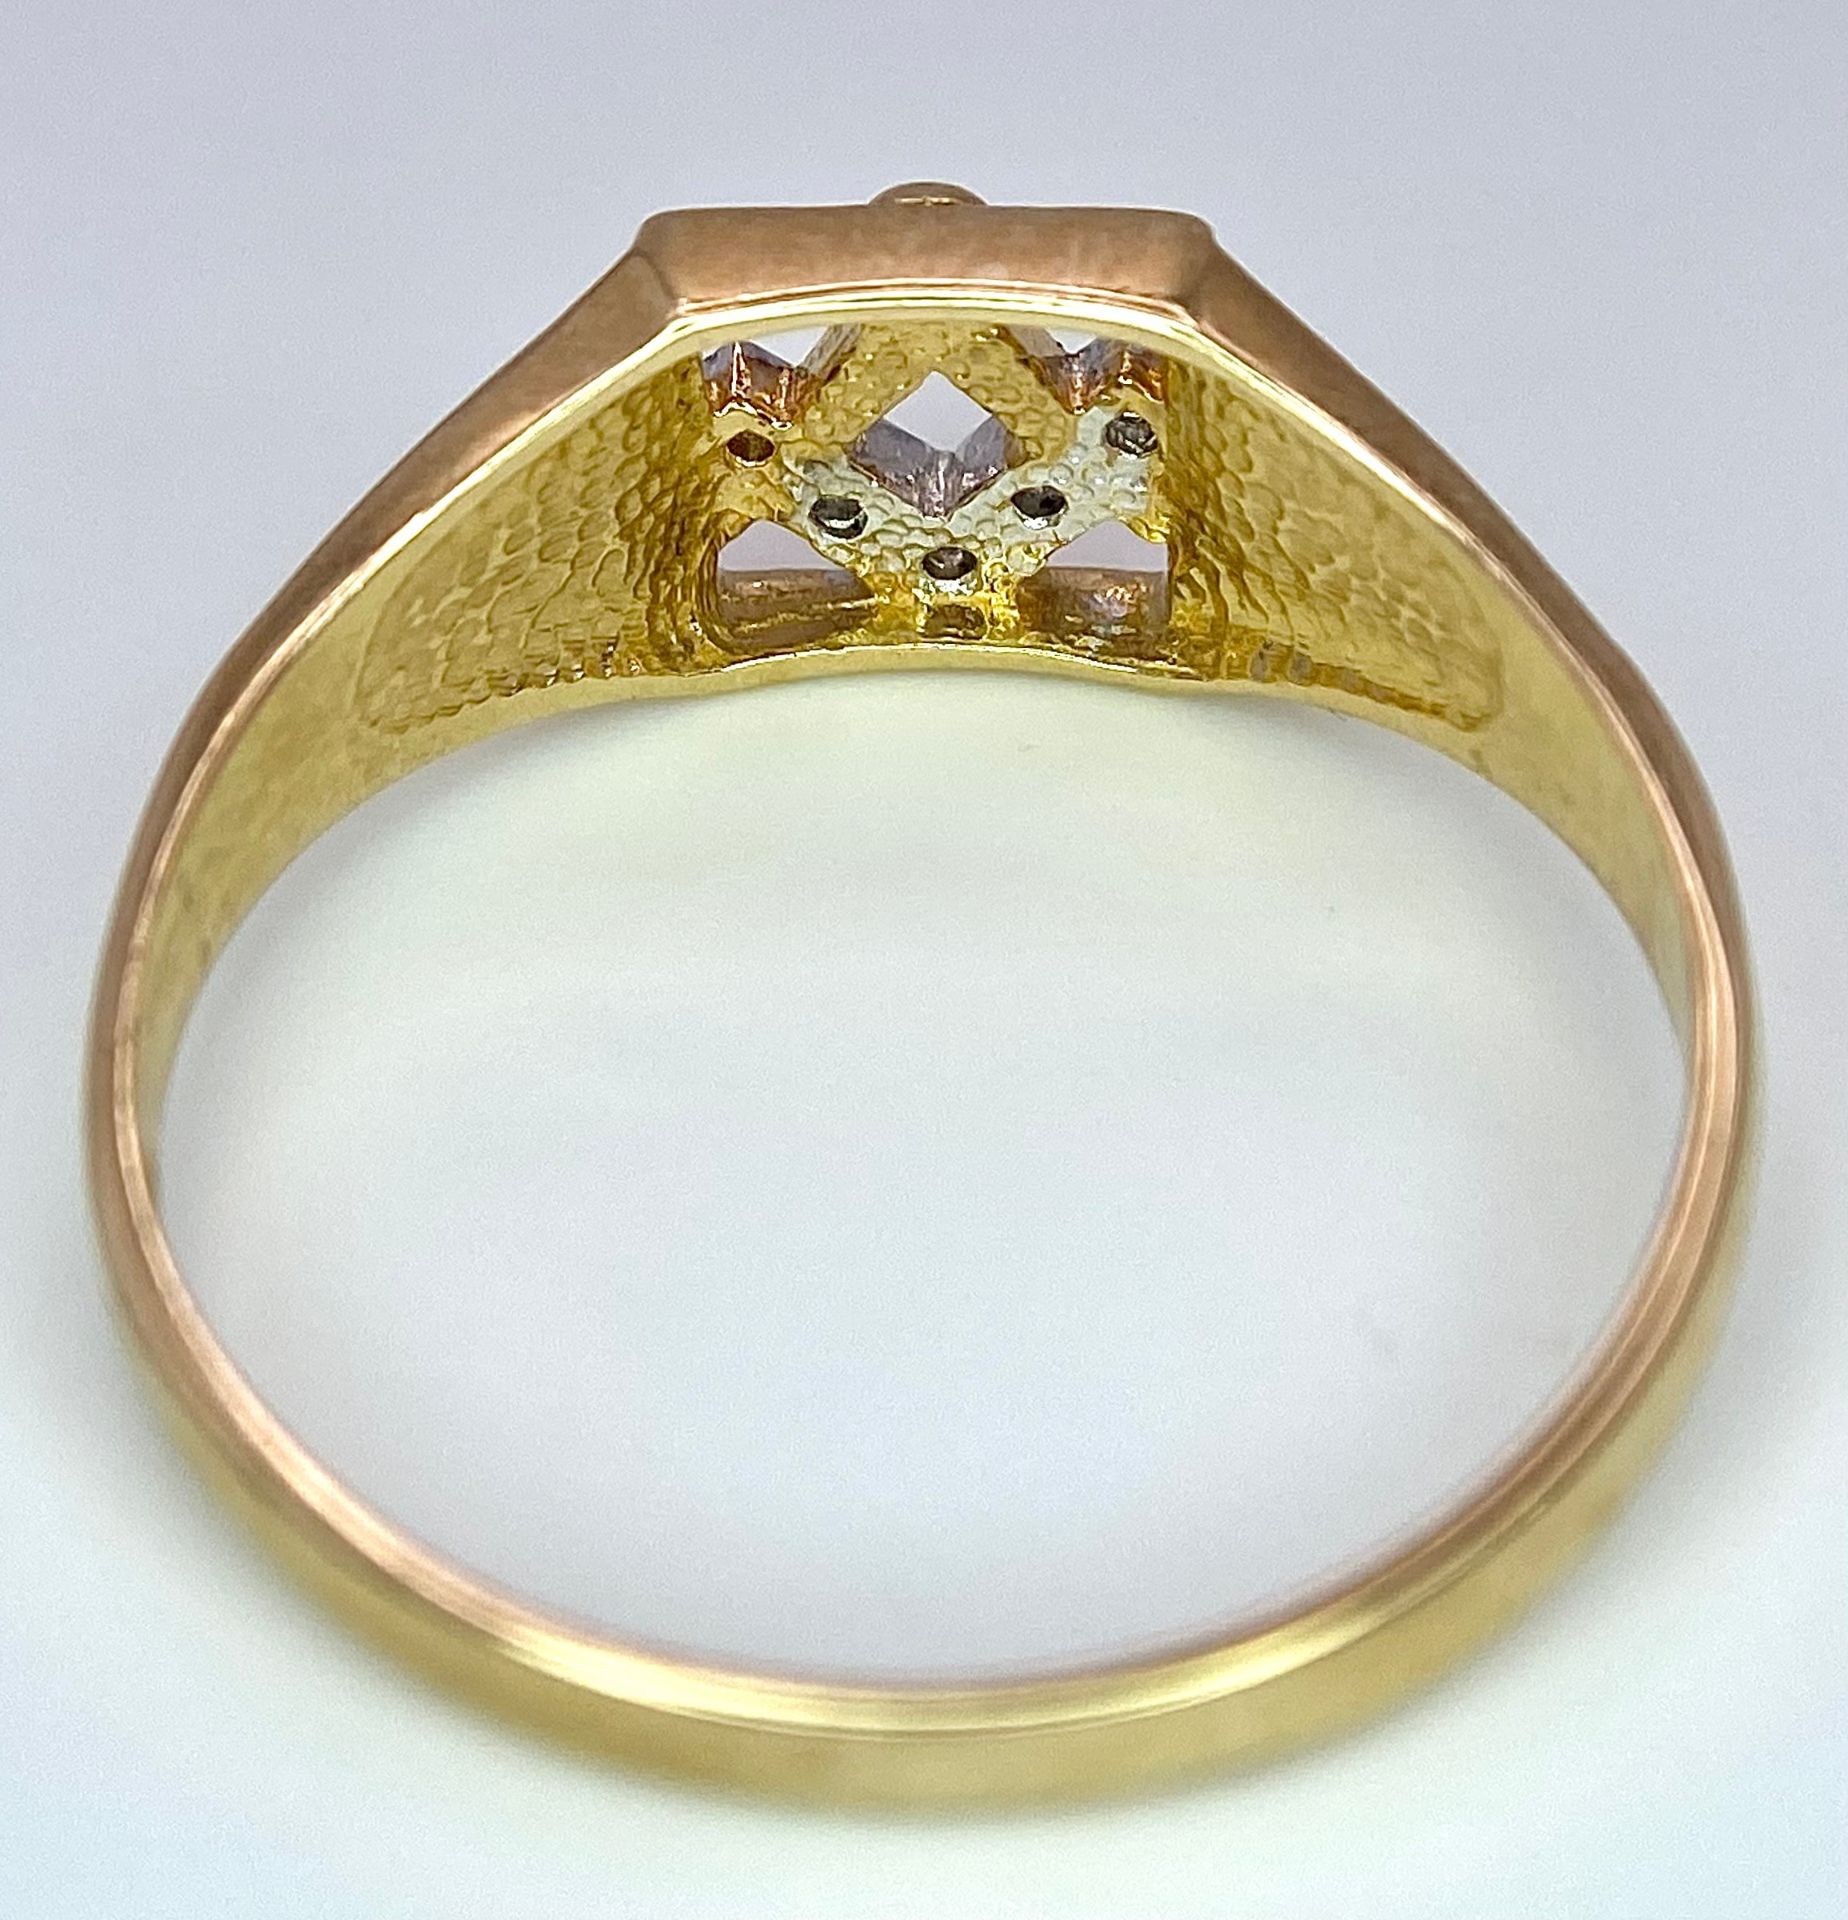 A 9K YELLOW GOLD DIAMOND SET MASONIC SYMBOL RING 2.7G SIZE U 1/2 SPAS 9017 - Image 5 of 6